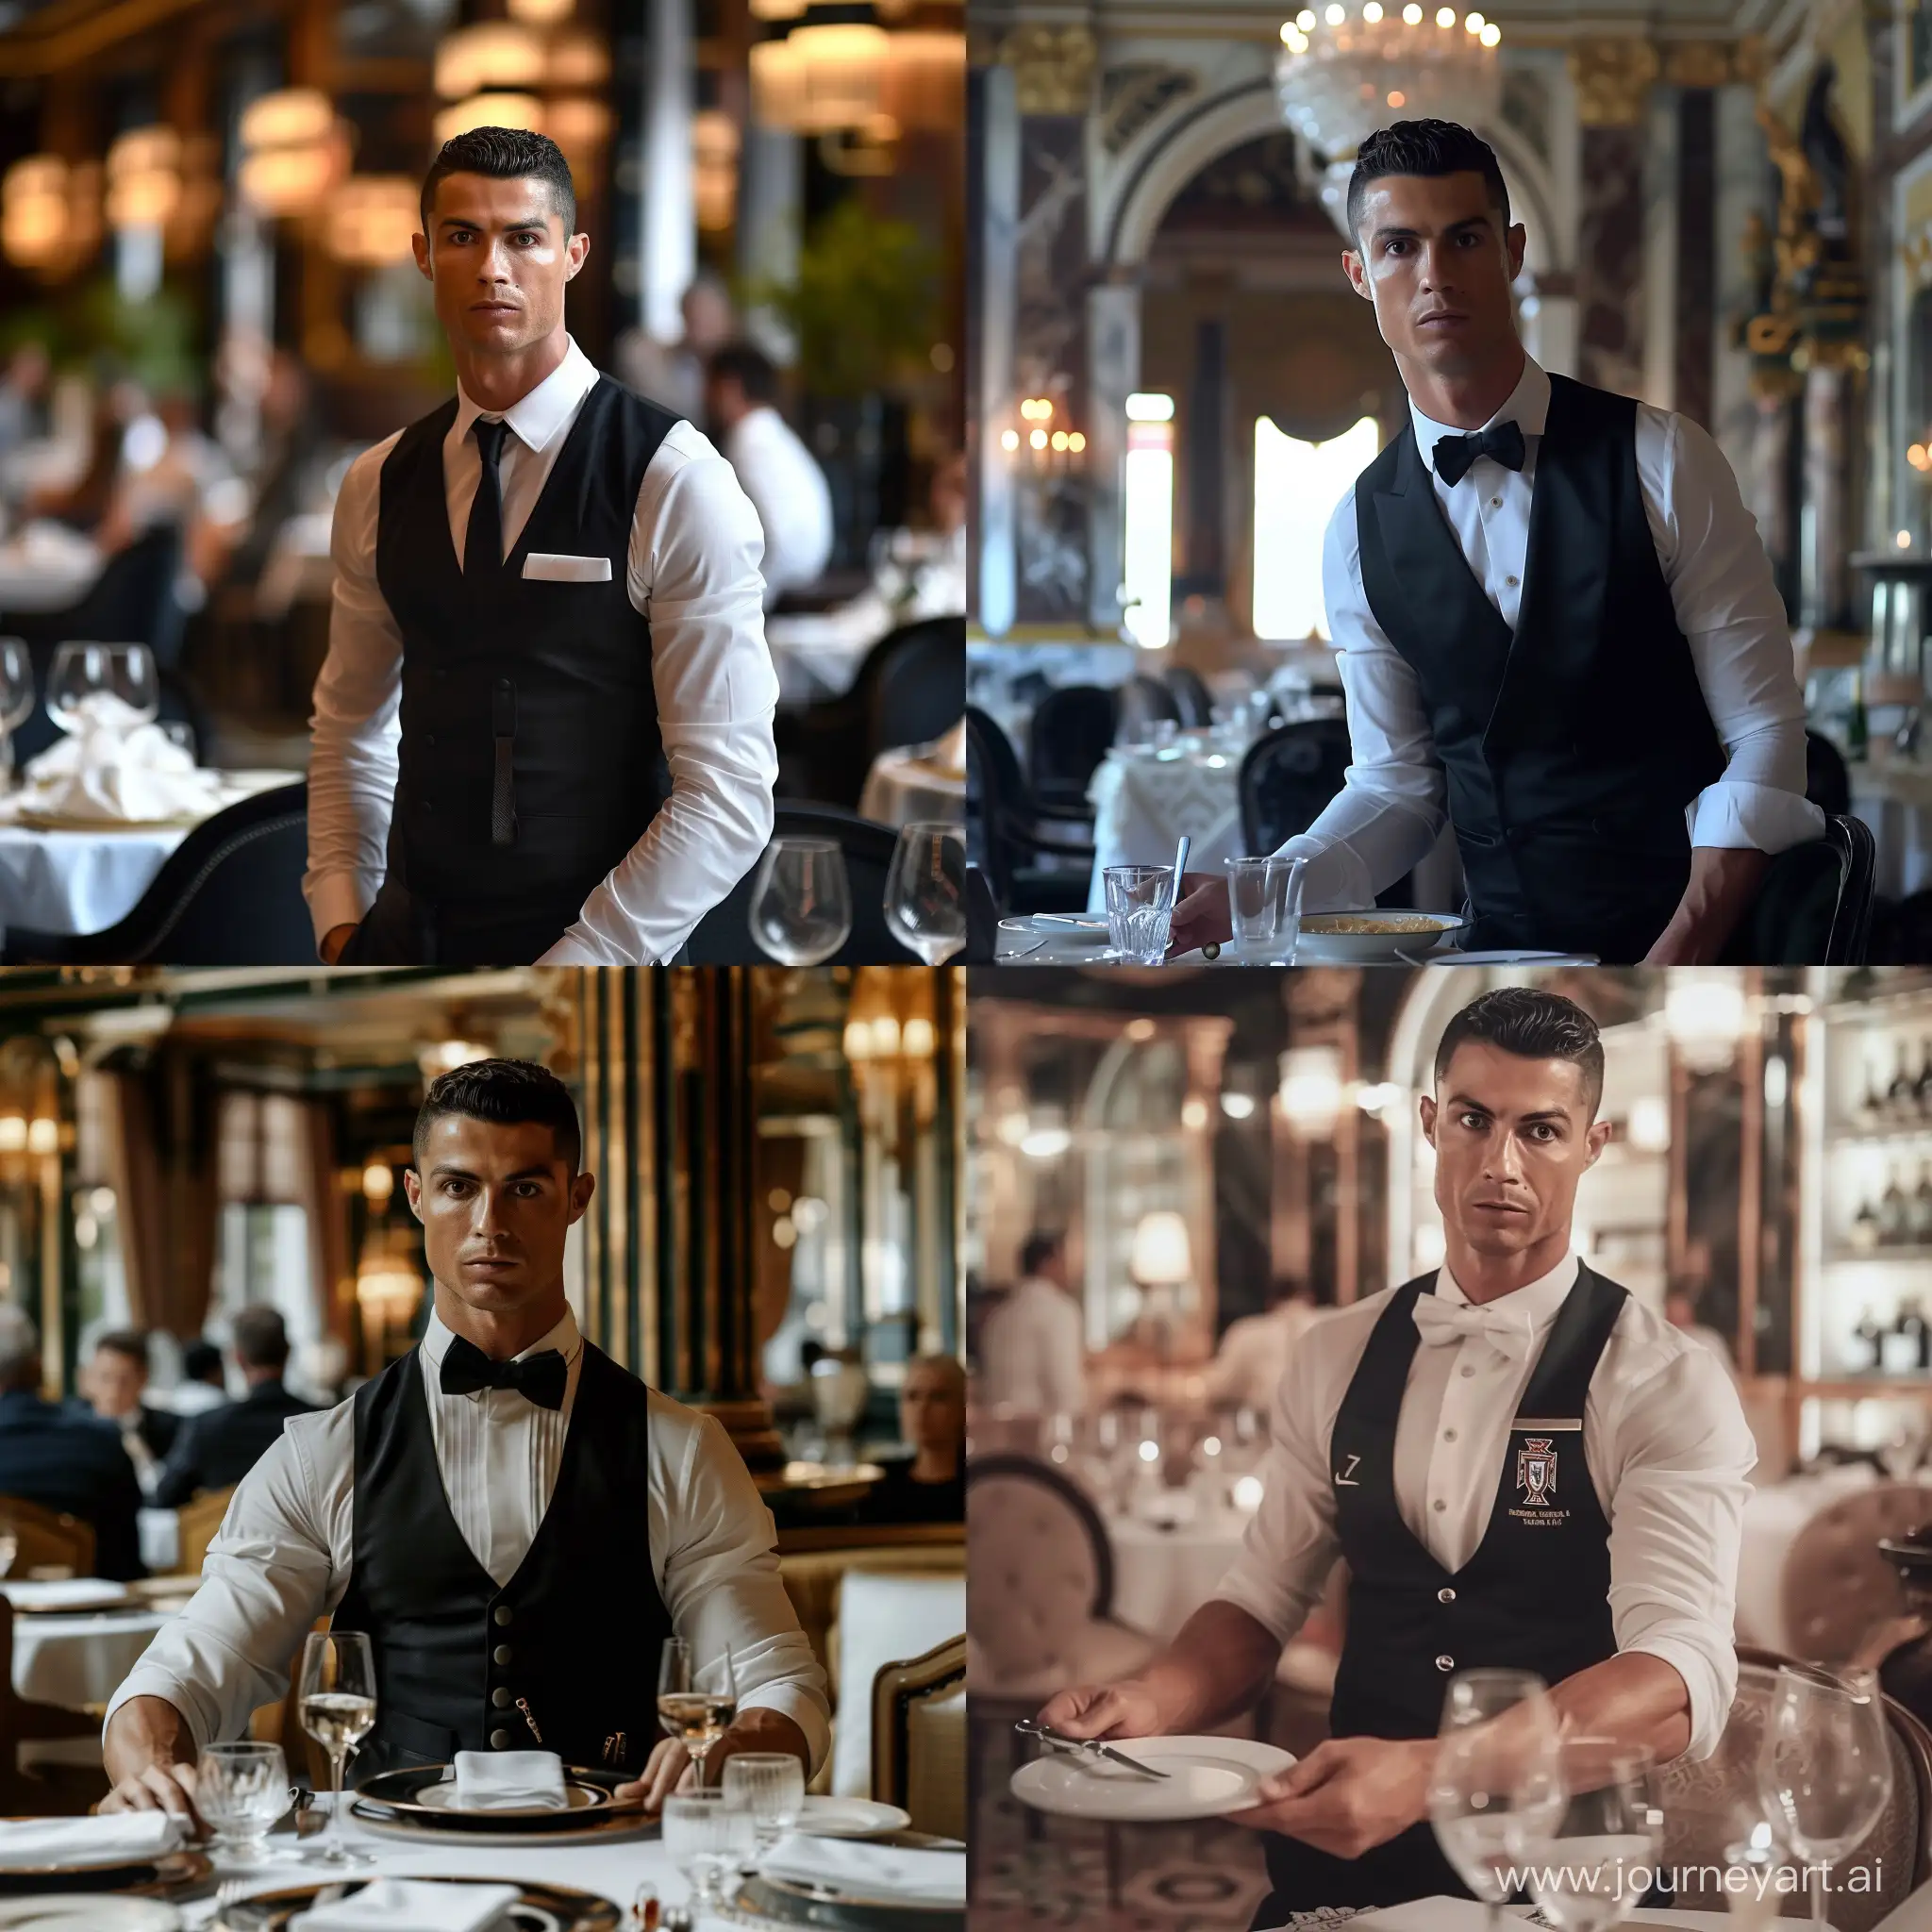 Cristiano-Ronaldo-Waitering-in-Upscale-Dining-Setting